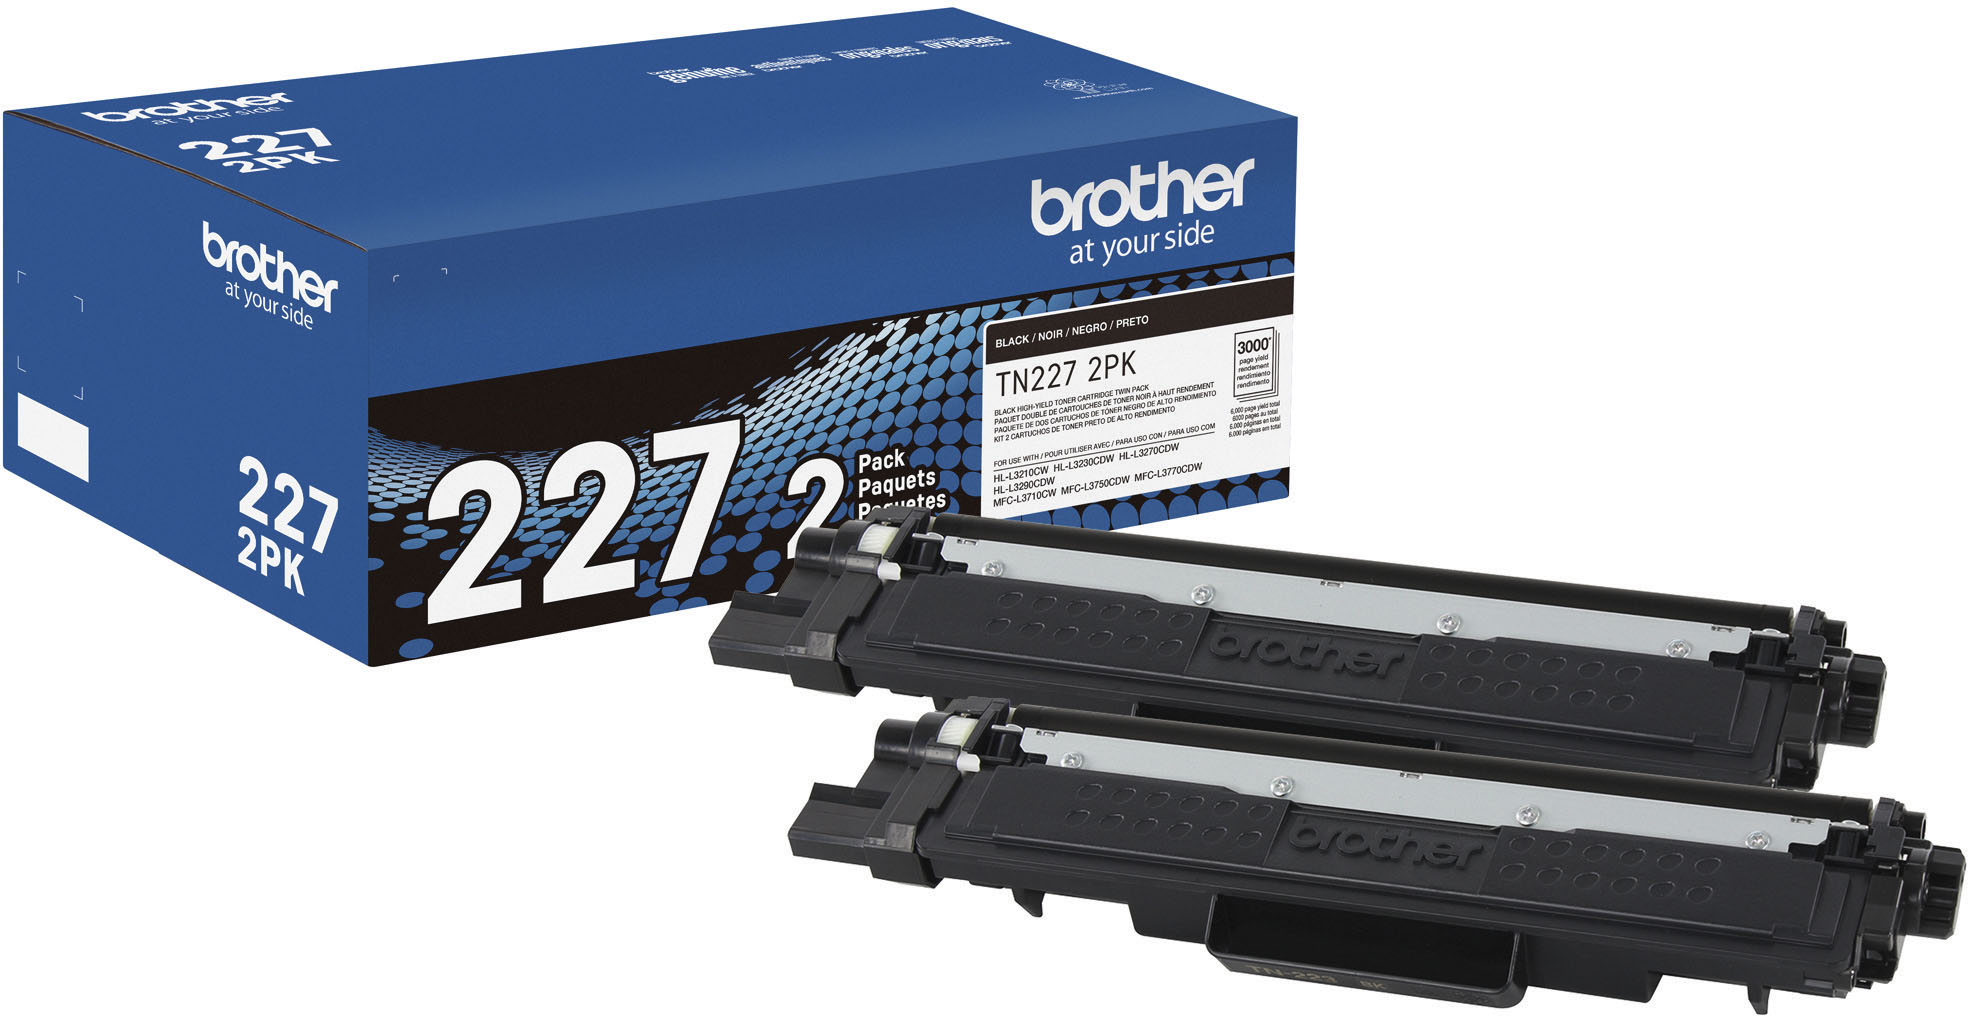 Brother MFC-L3750CDW Toner Cartridges 